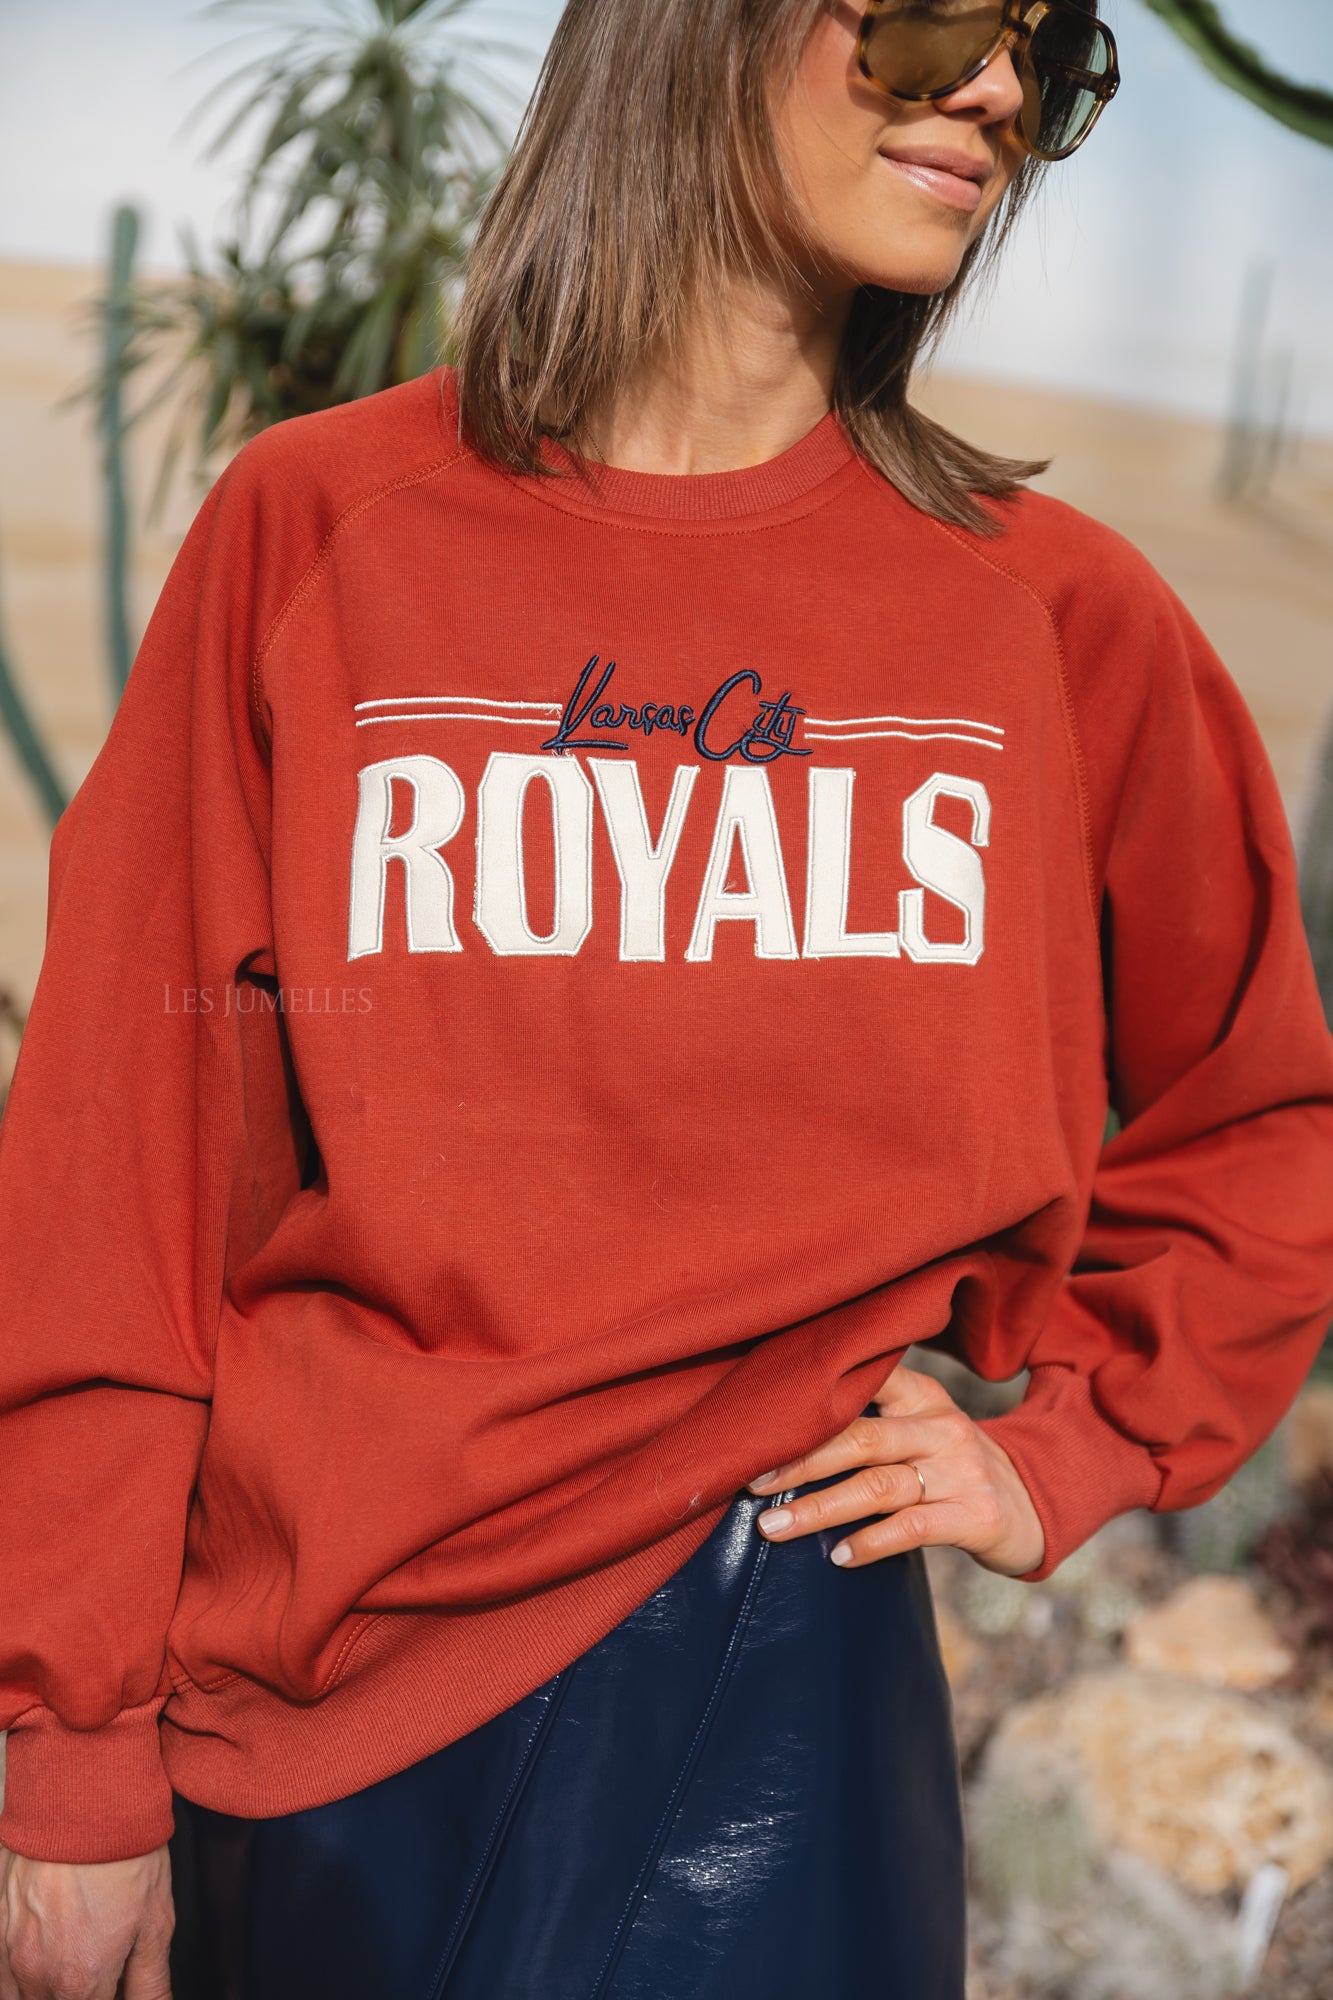 Royals sweater brick